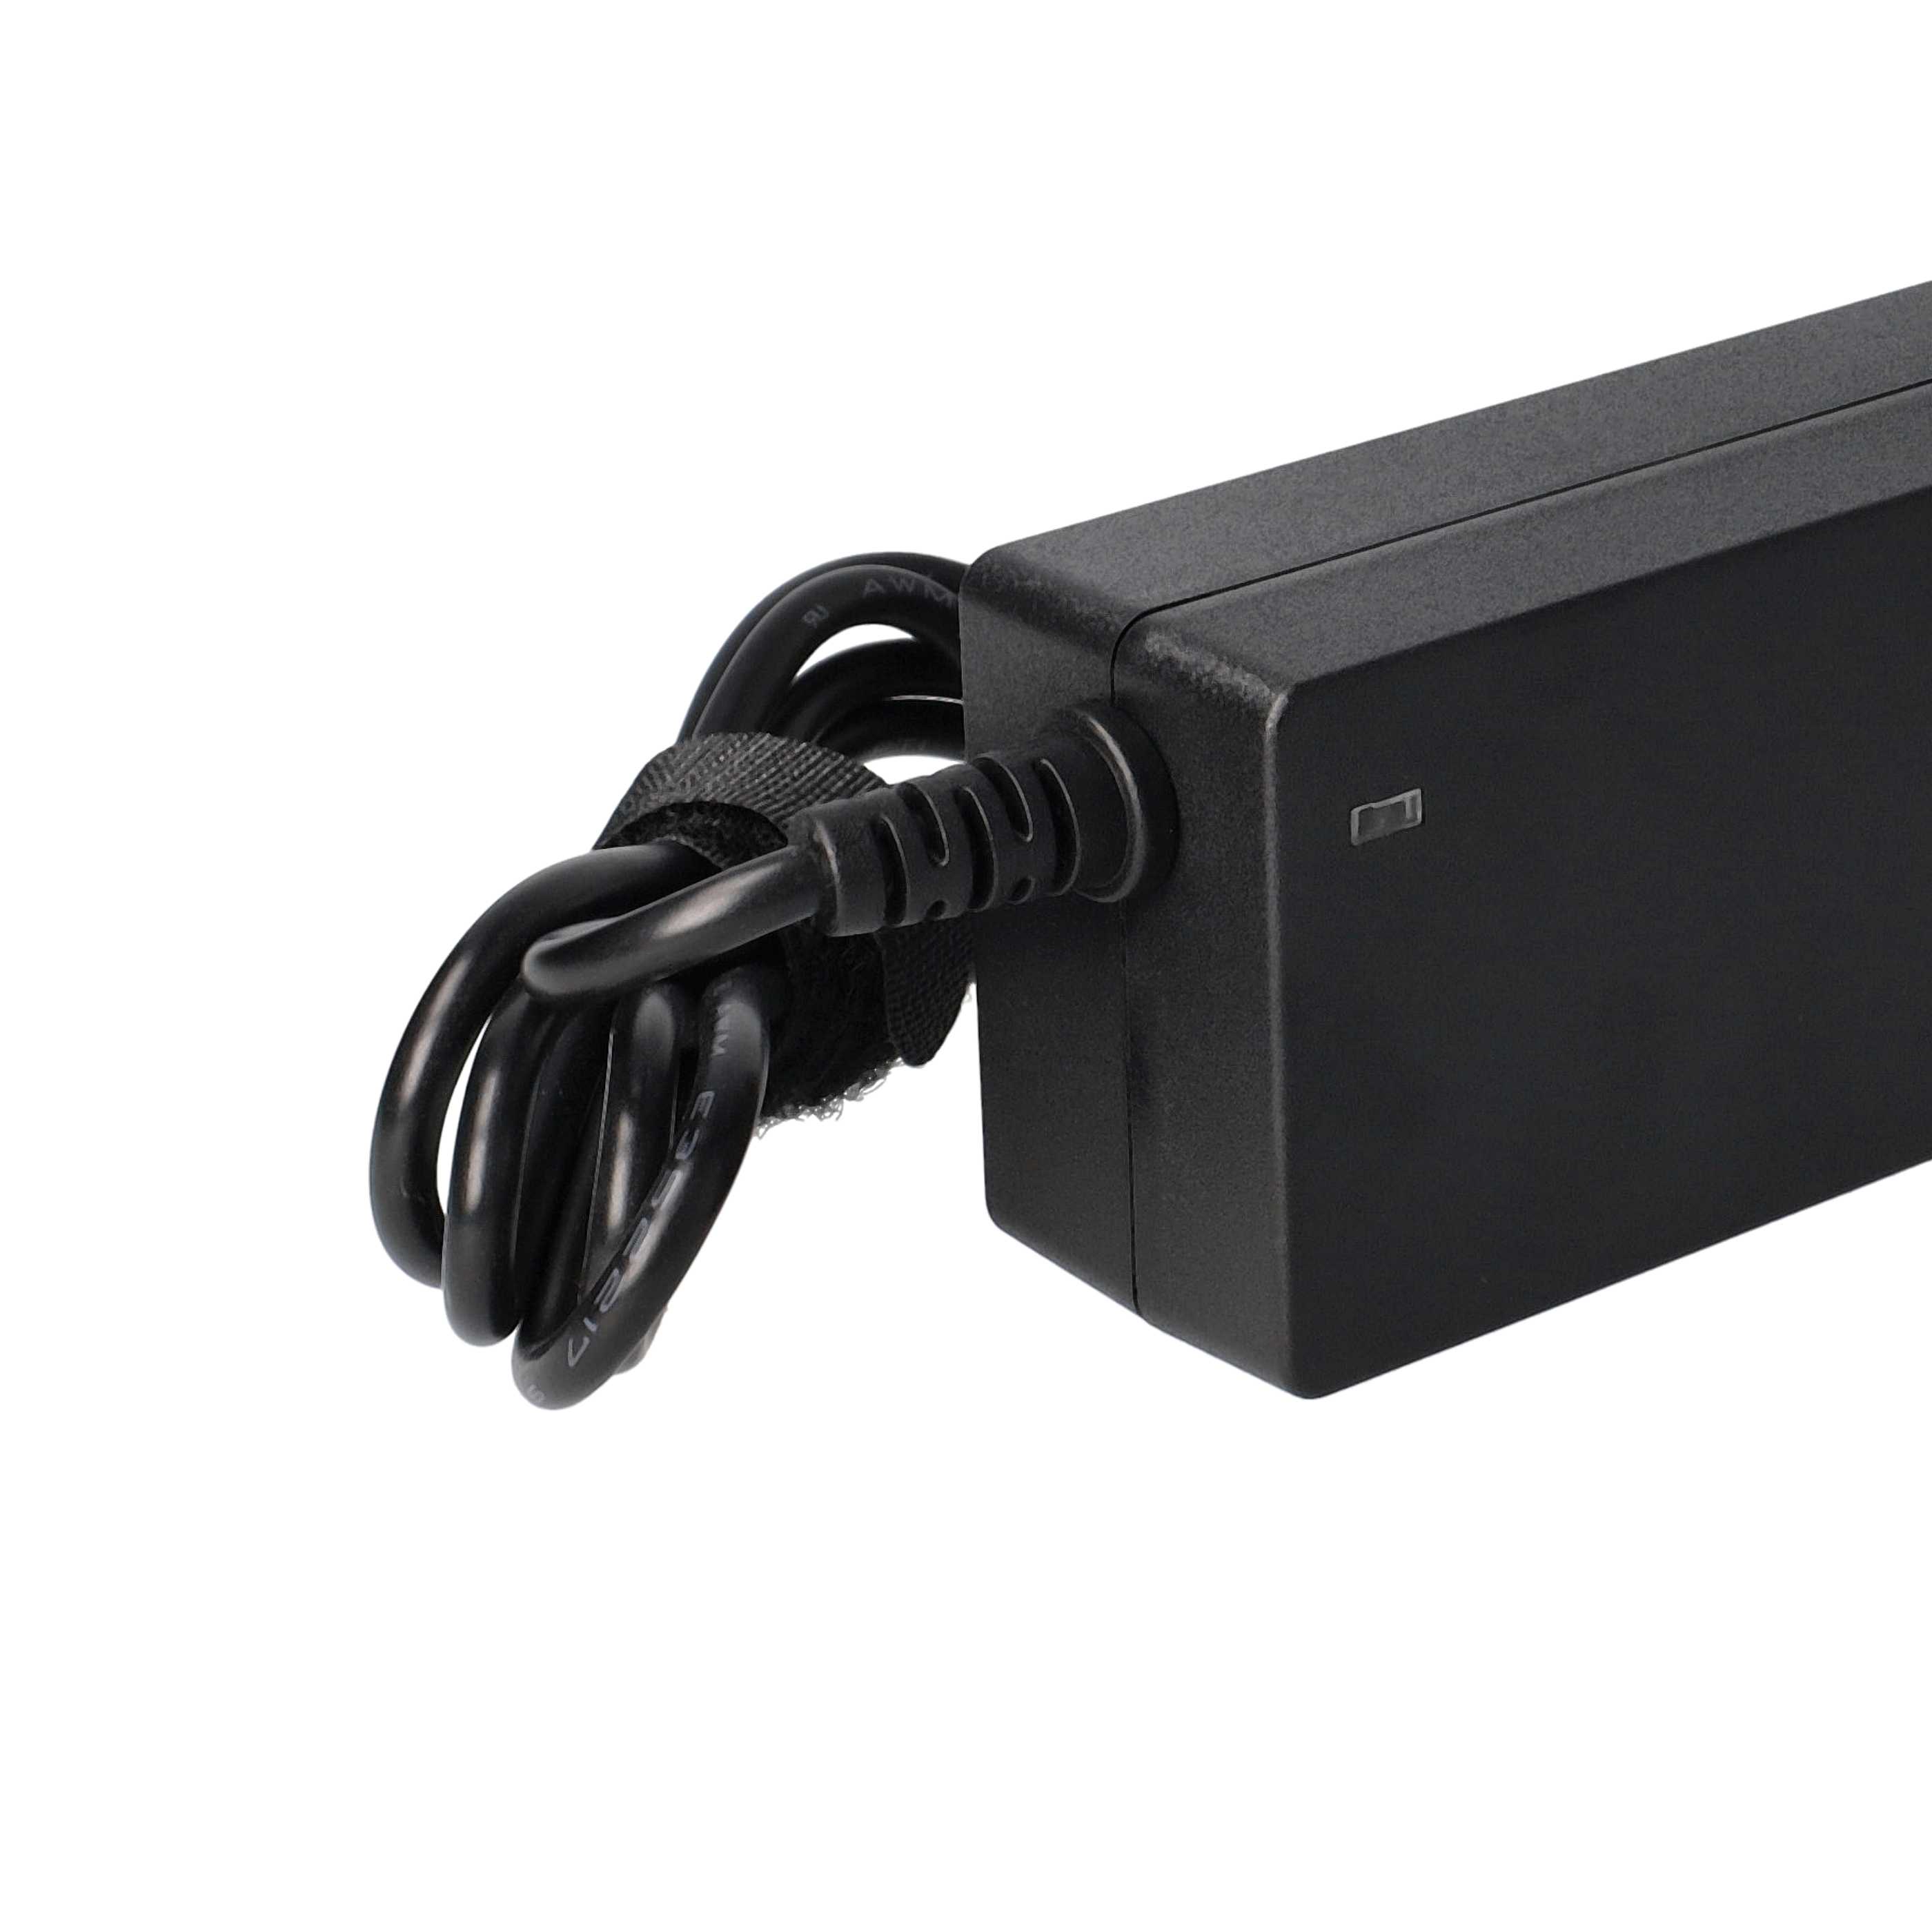 Mains Power Adapter replaces Fujitsu-Siemens FSC0335A2065 for Fujitsu-SiemensNotebook etc., 65 W